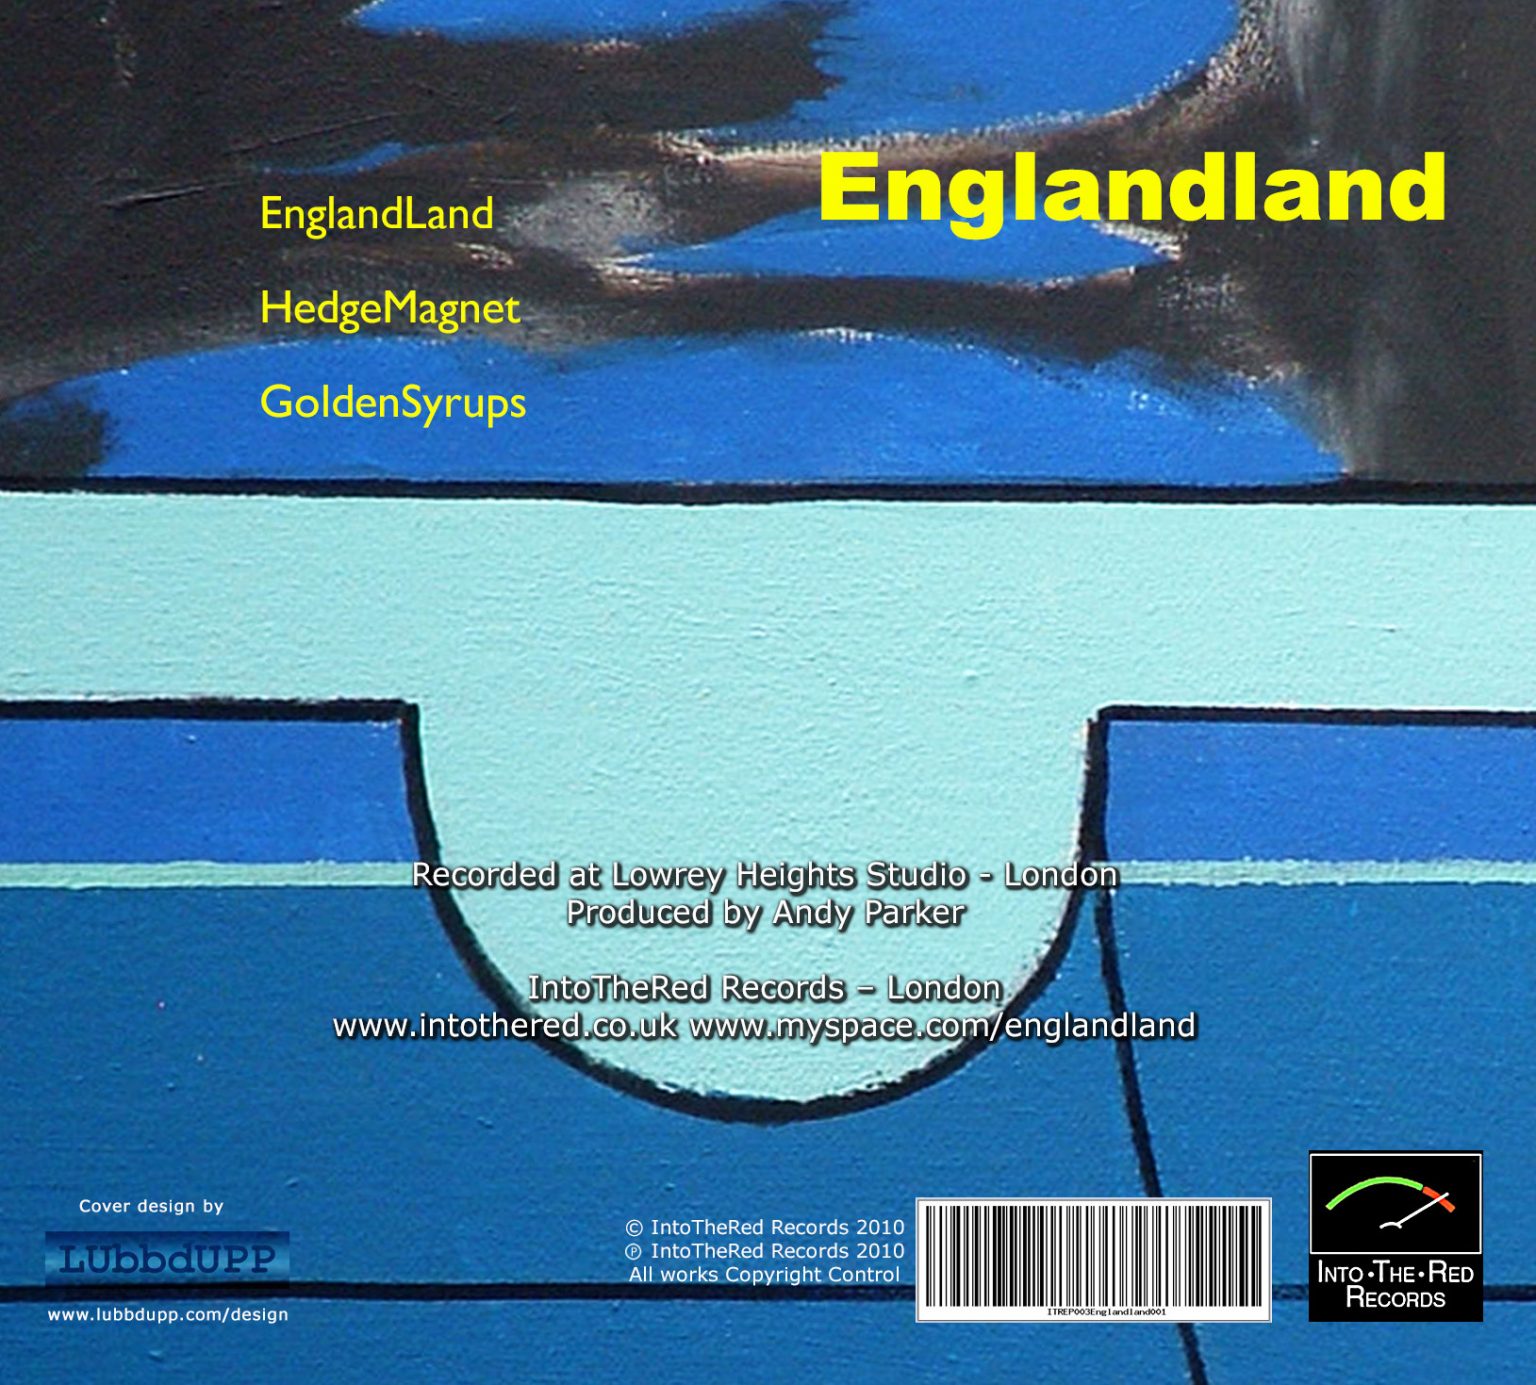 Englandland EP1 back cover